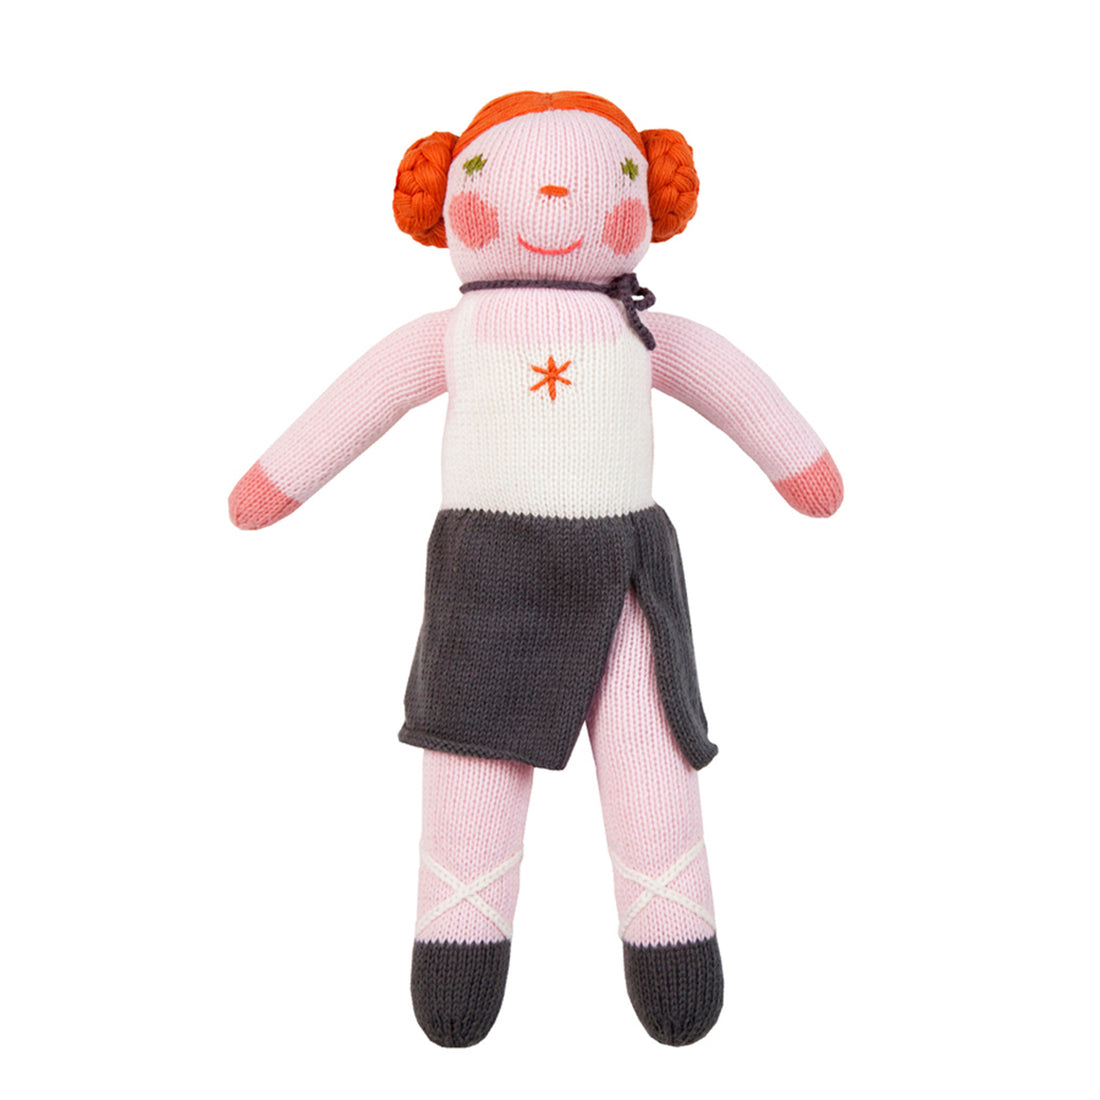 blabla-kids-giselle-the-ballerina-play-hug-plushy-baby-kid-knit-doll-blab-105207-01